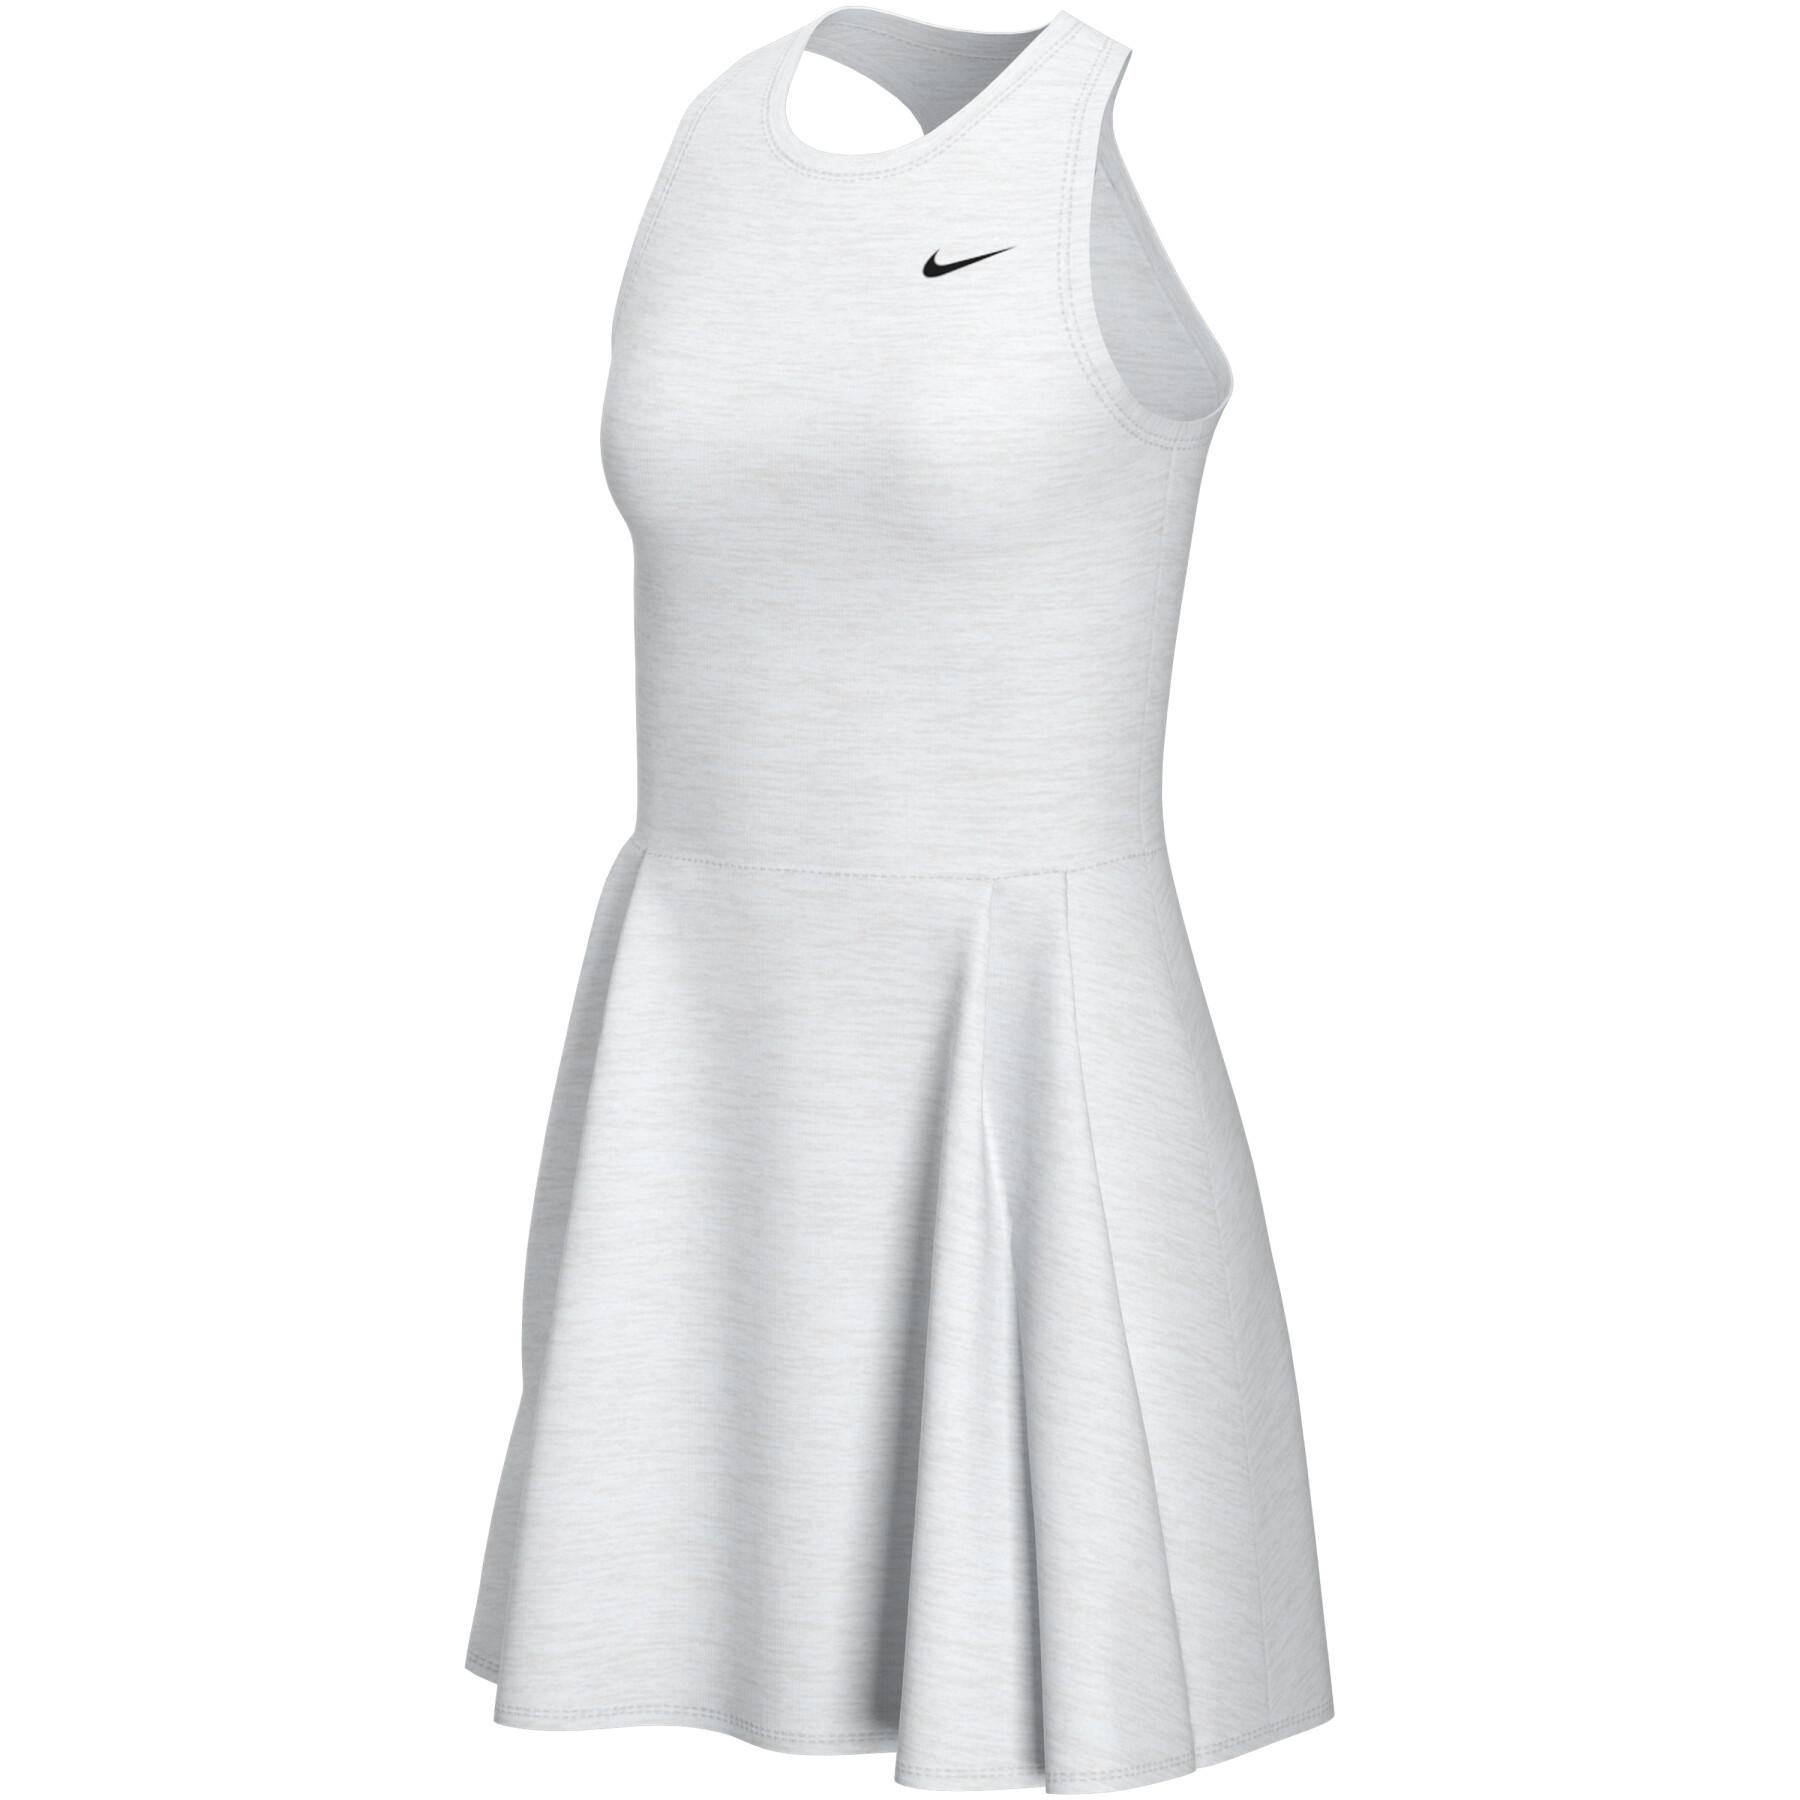 Vestuário feminino Nike court advantage